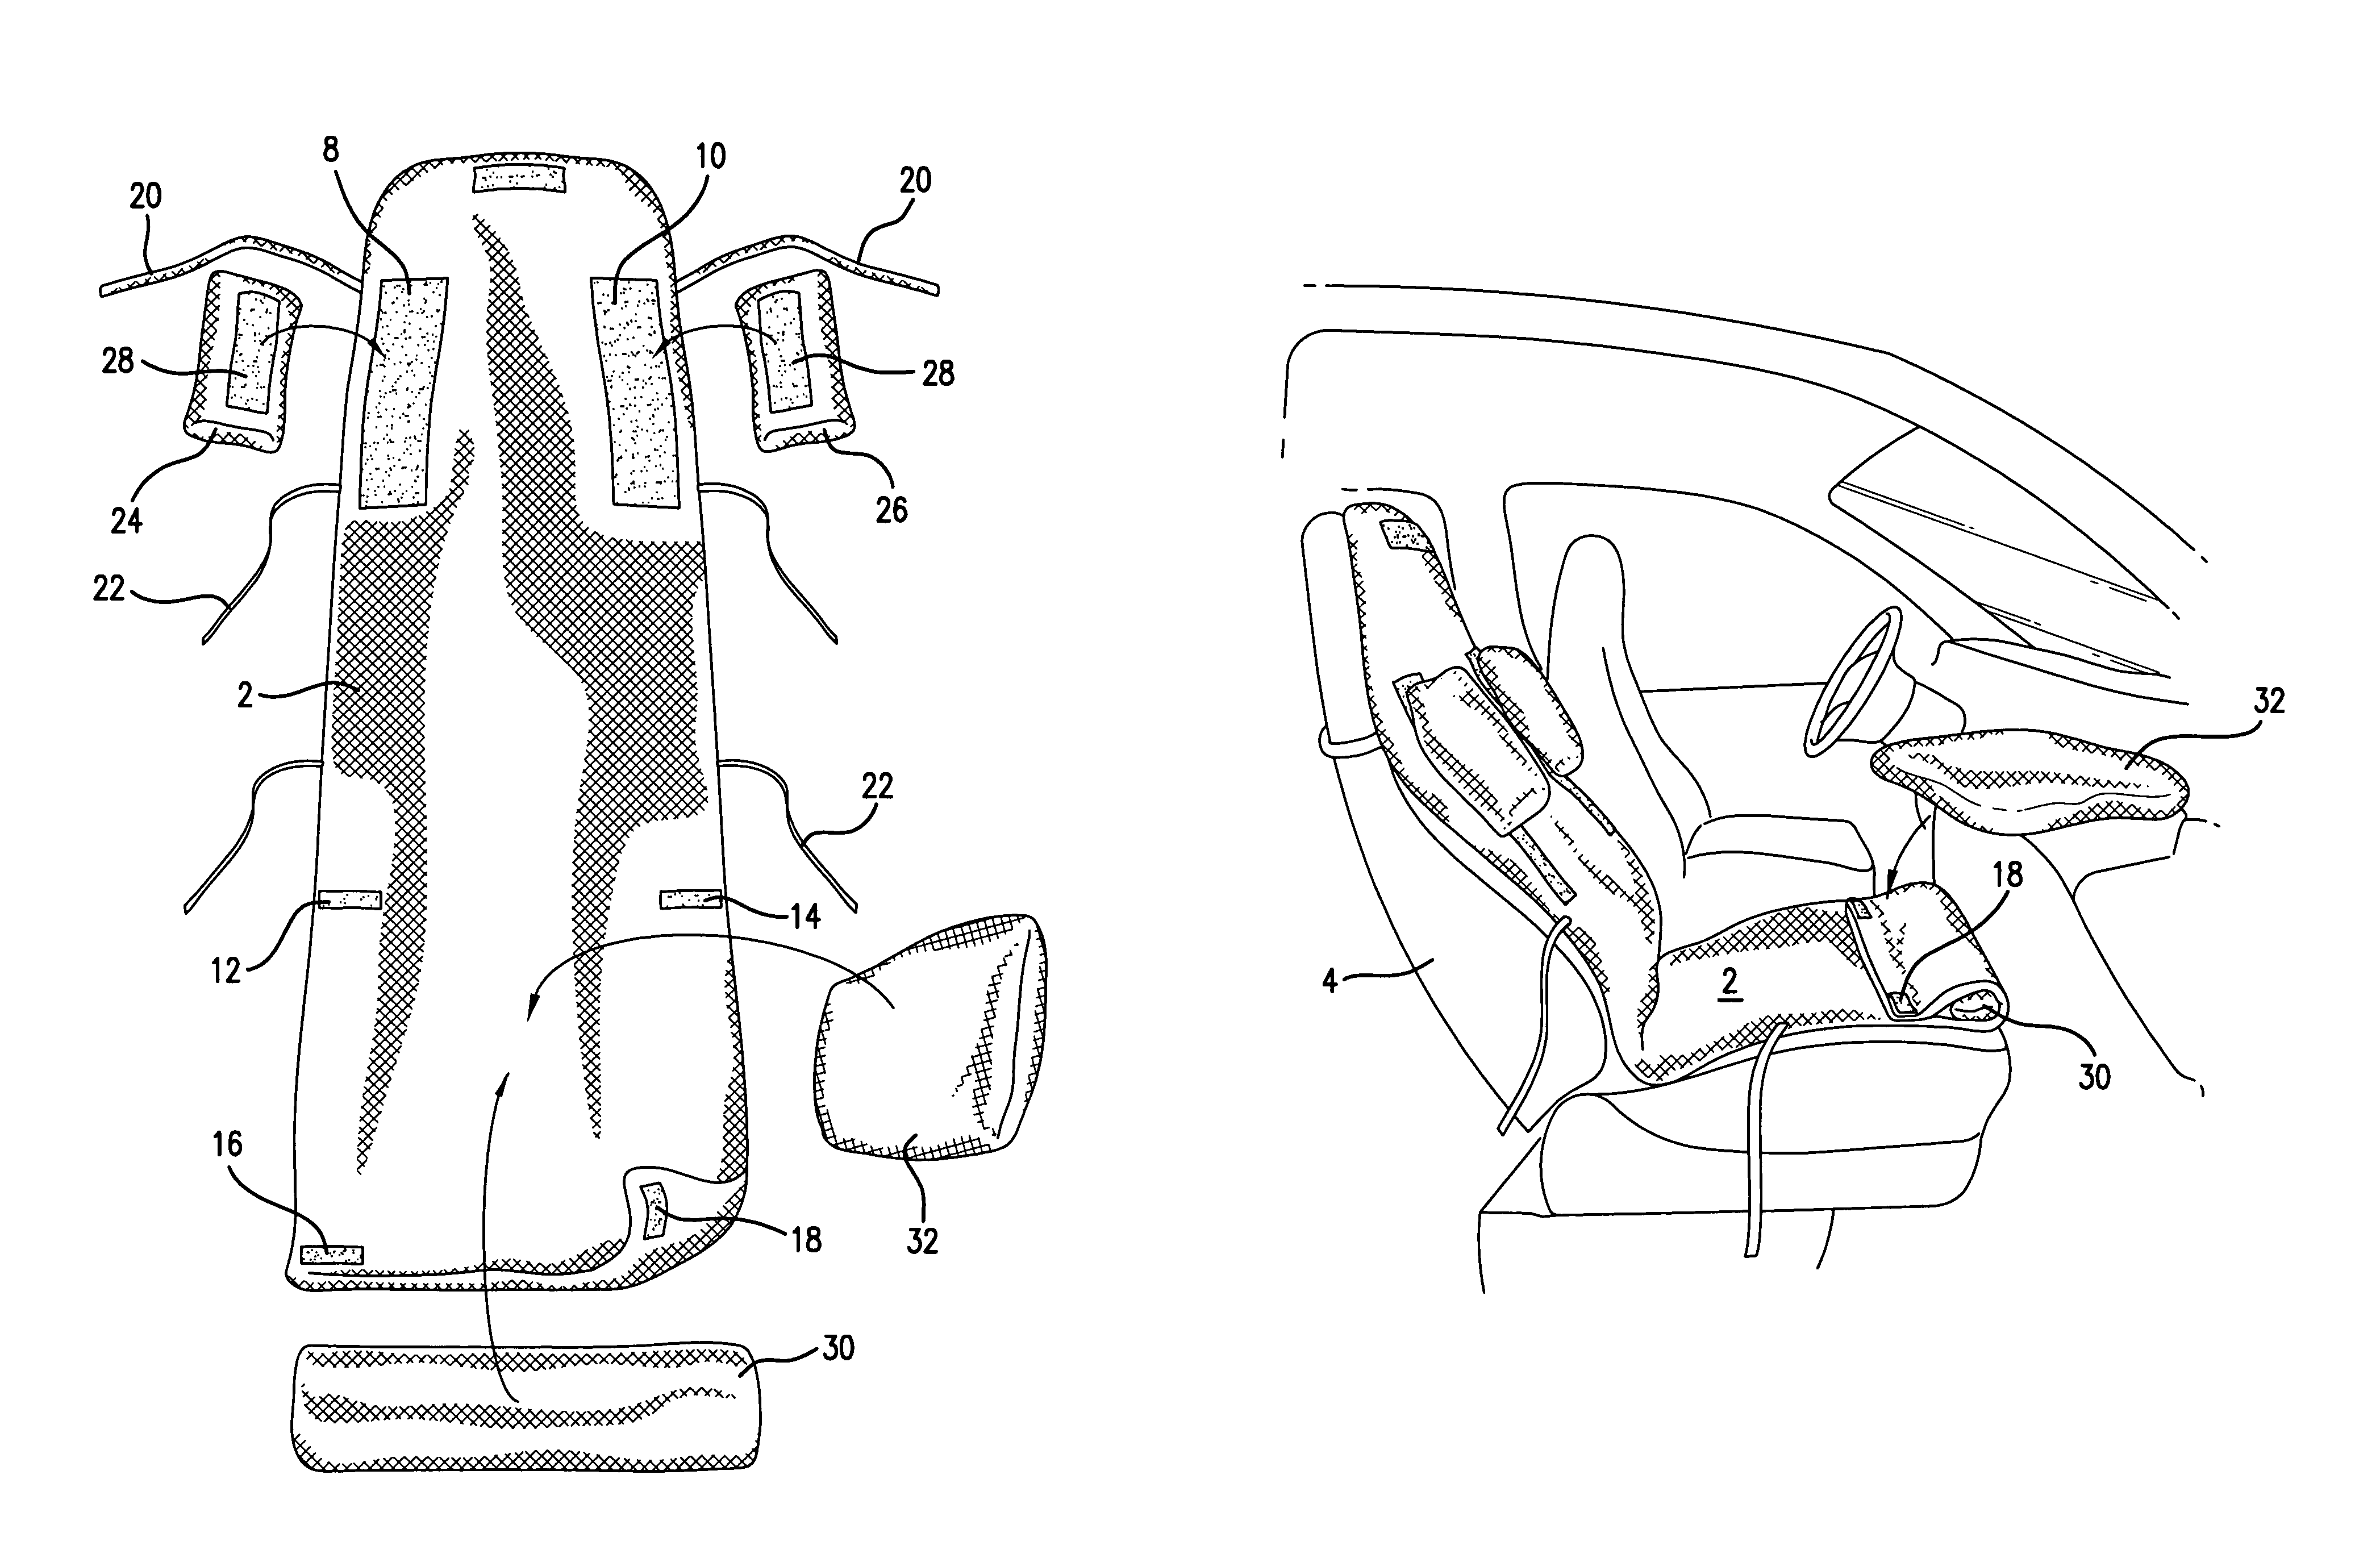 Vehicle seat pad